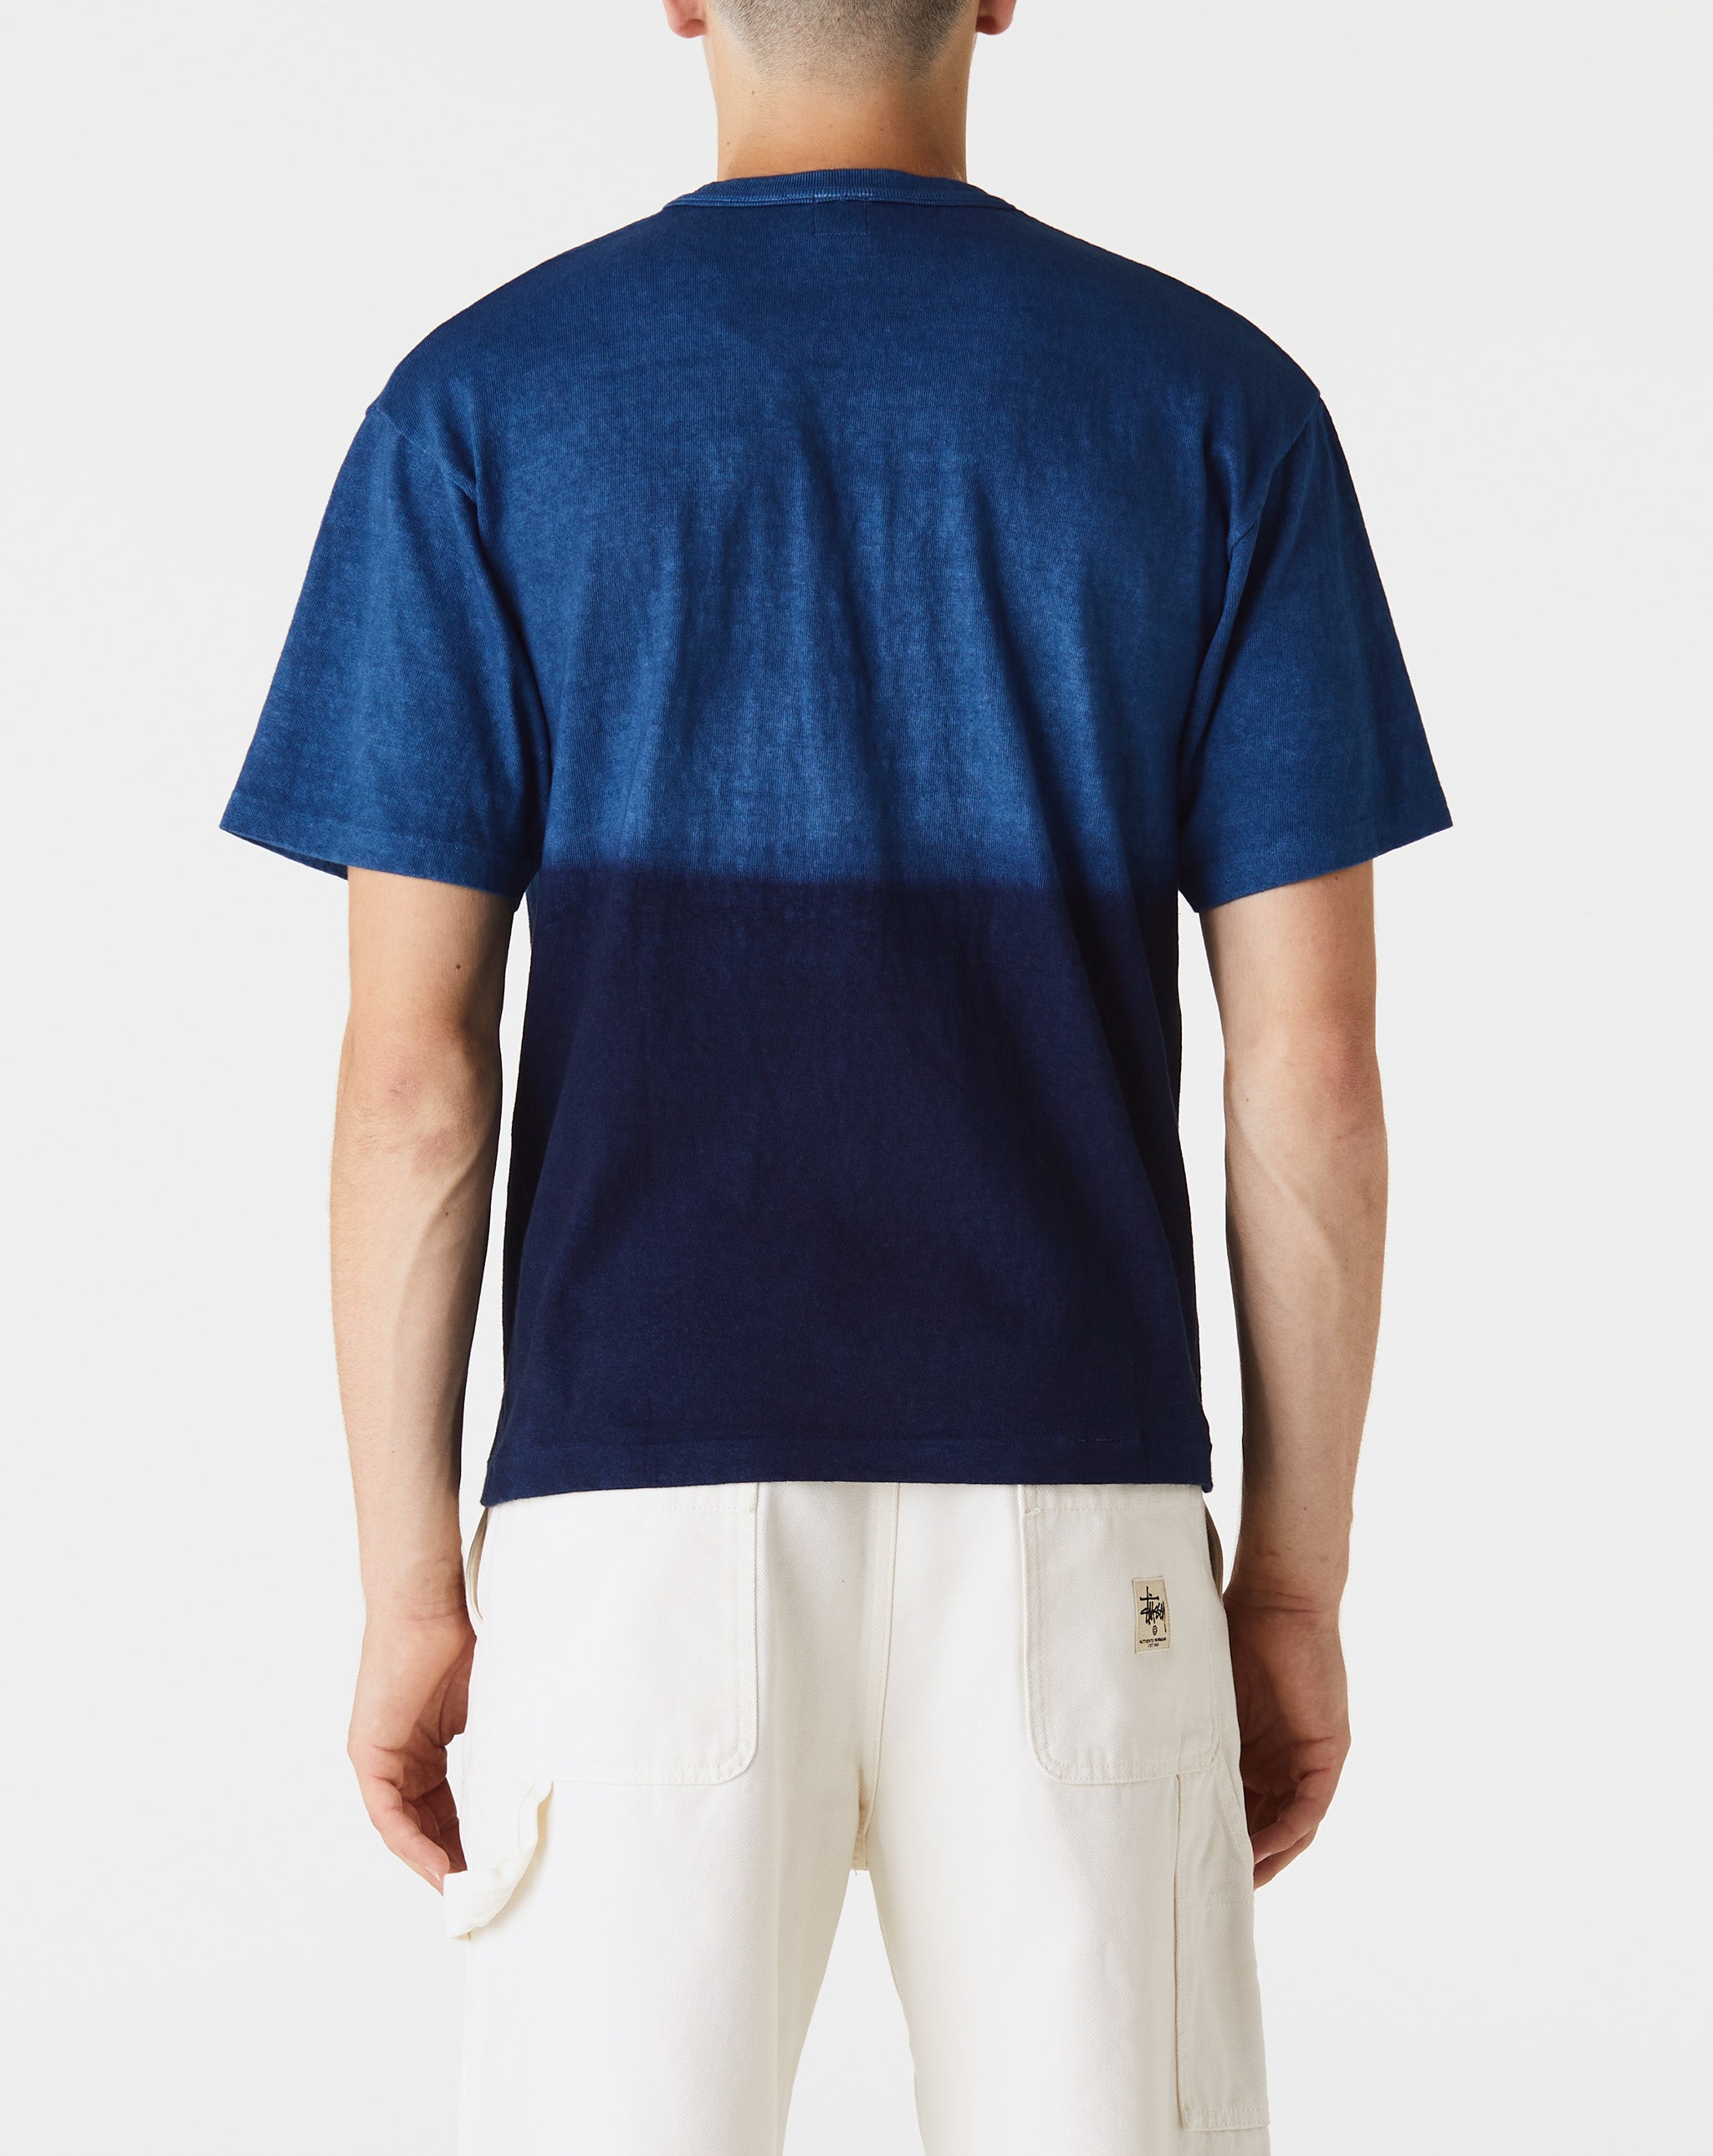 Human Made Indigo Dyed T-Shirt #1  - XHIBITION